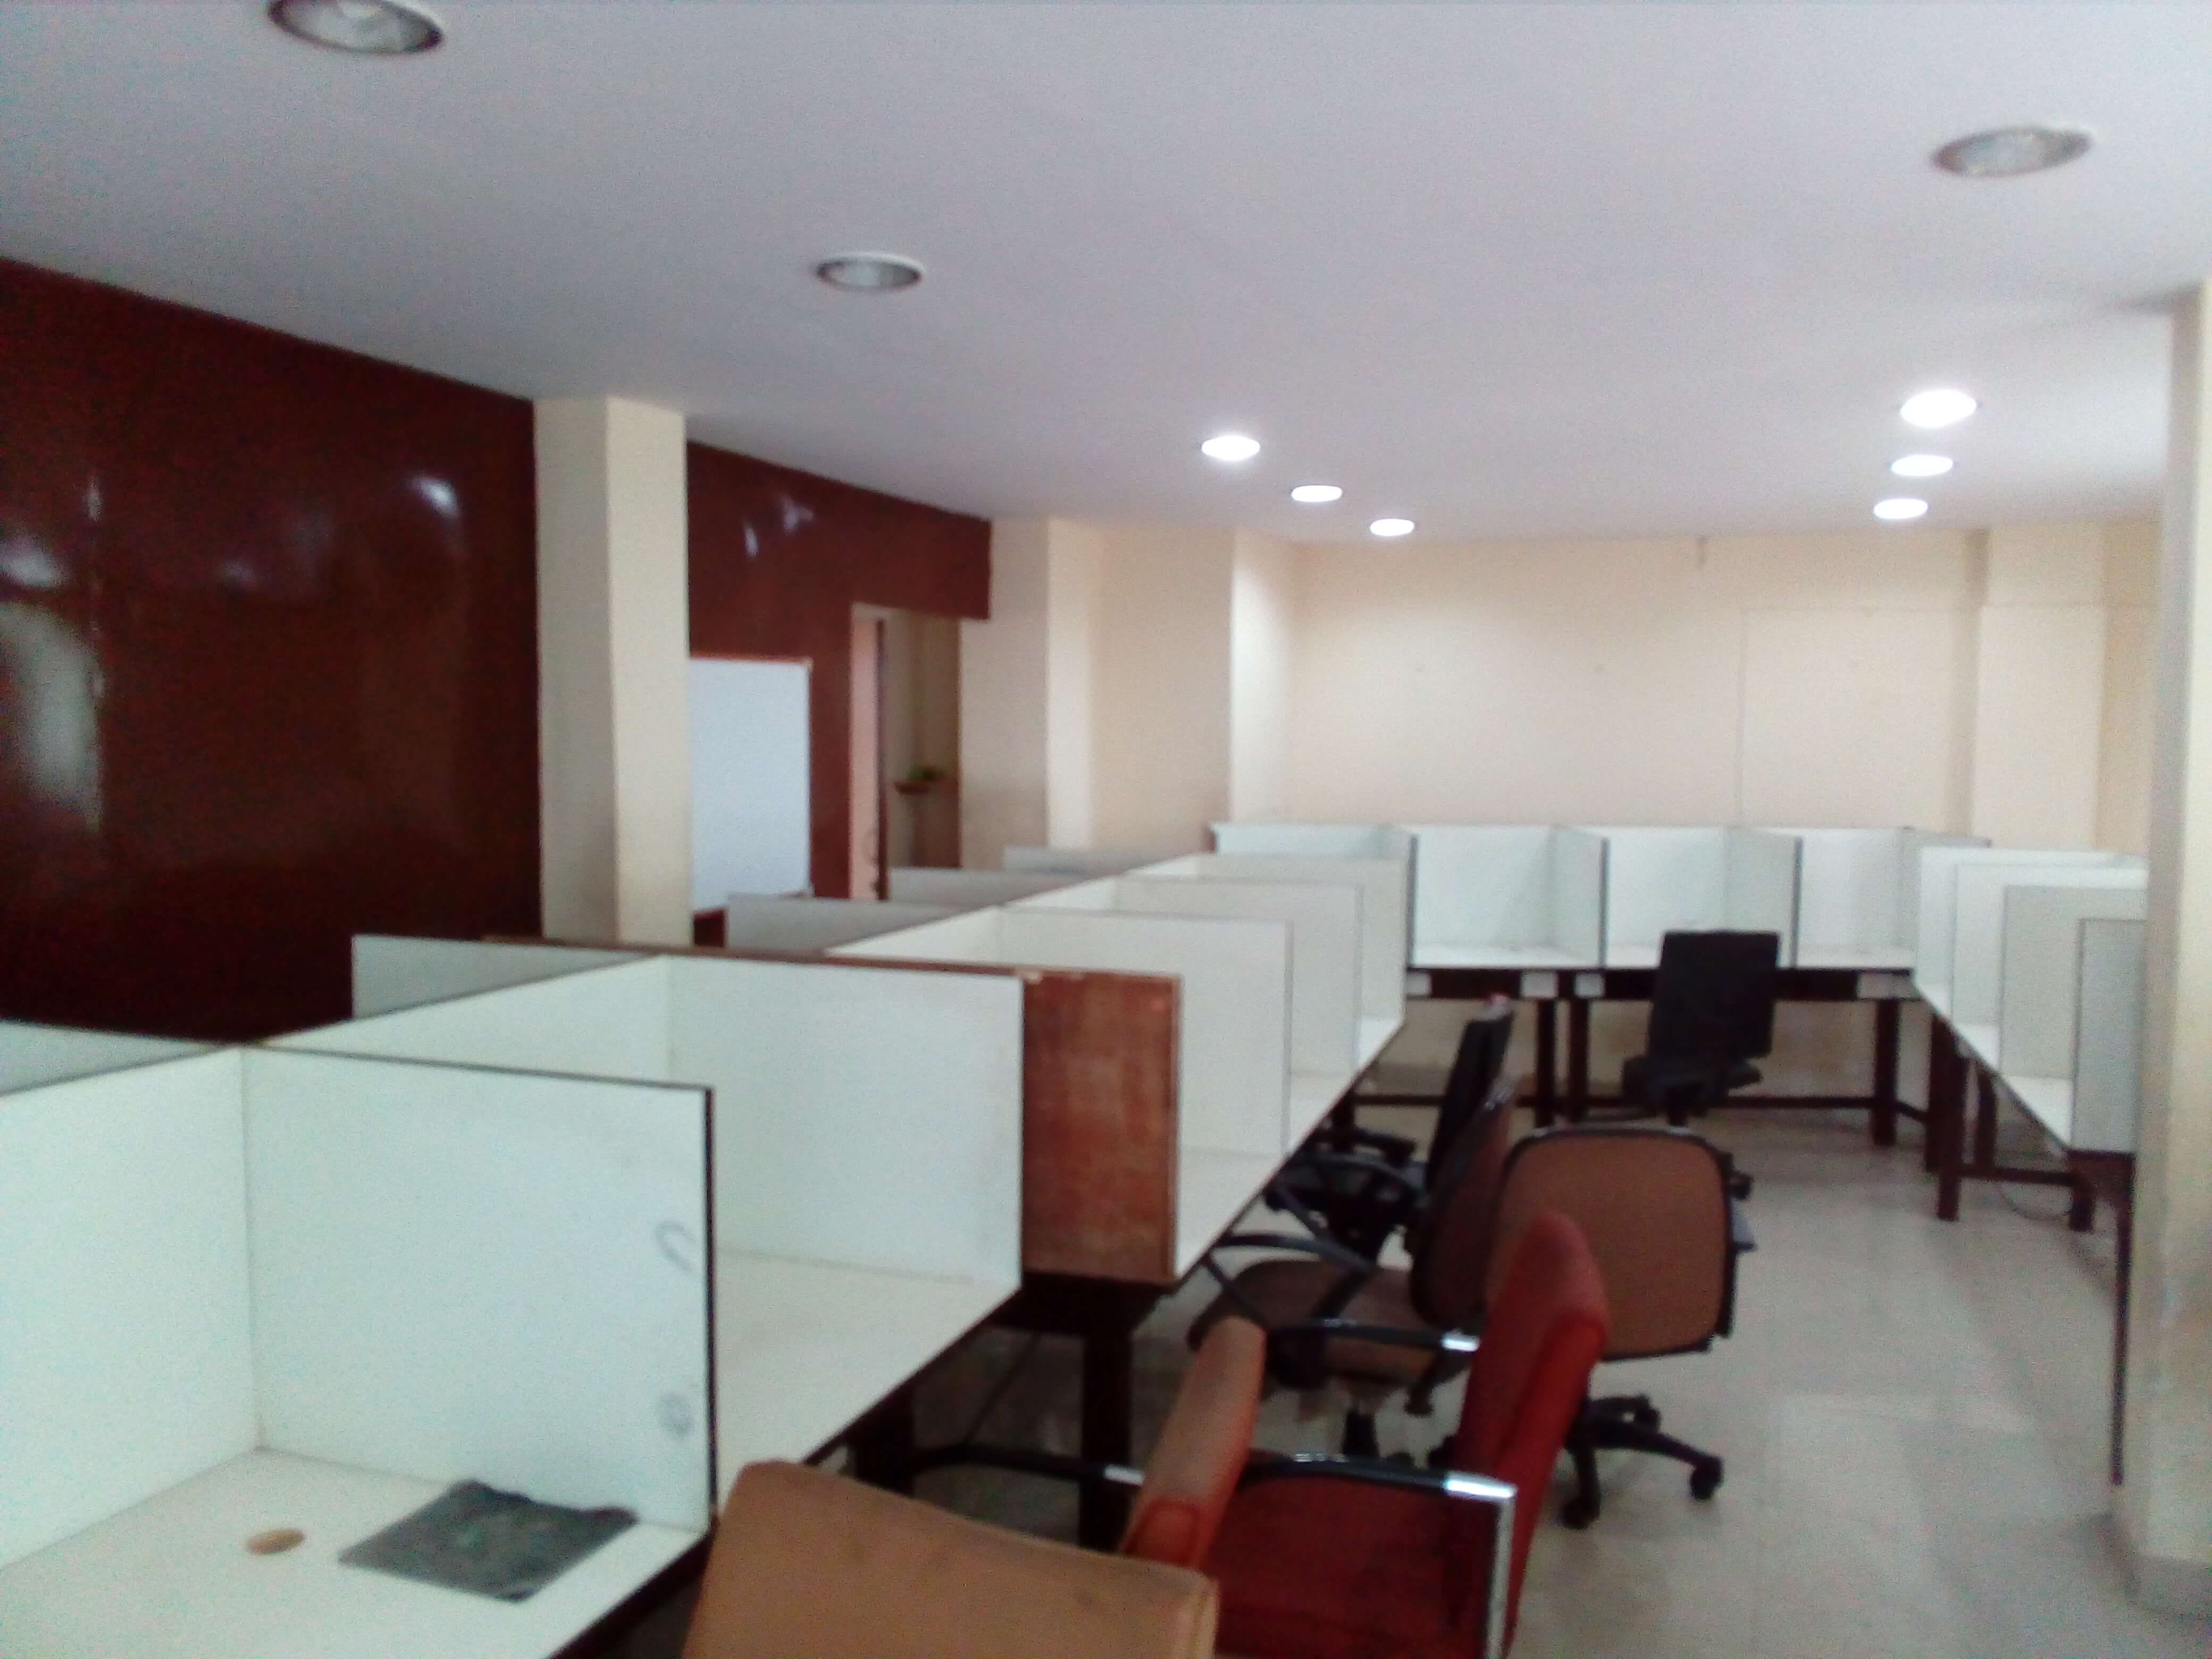 Office For Rent in Sarat Bose Road Kolkata (Id: 1611)